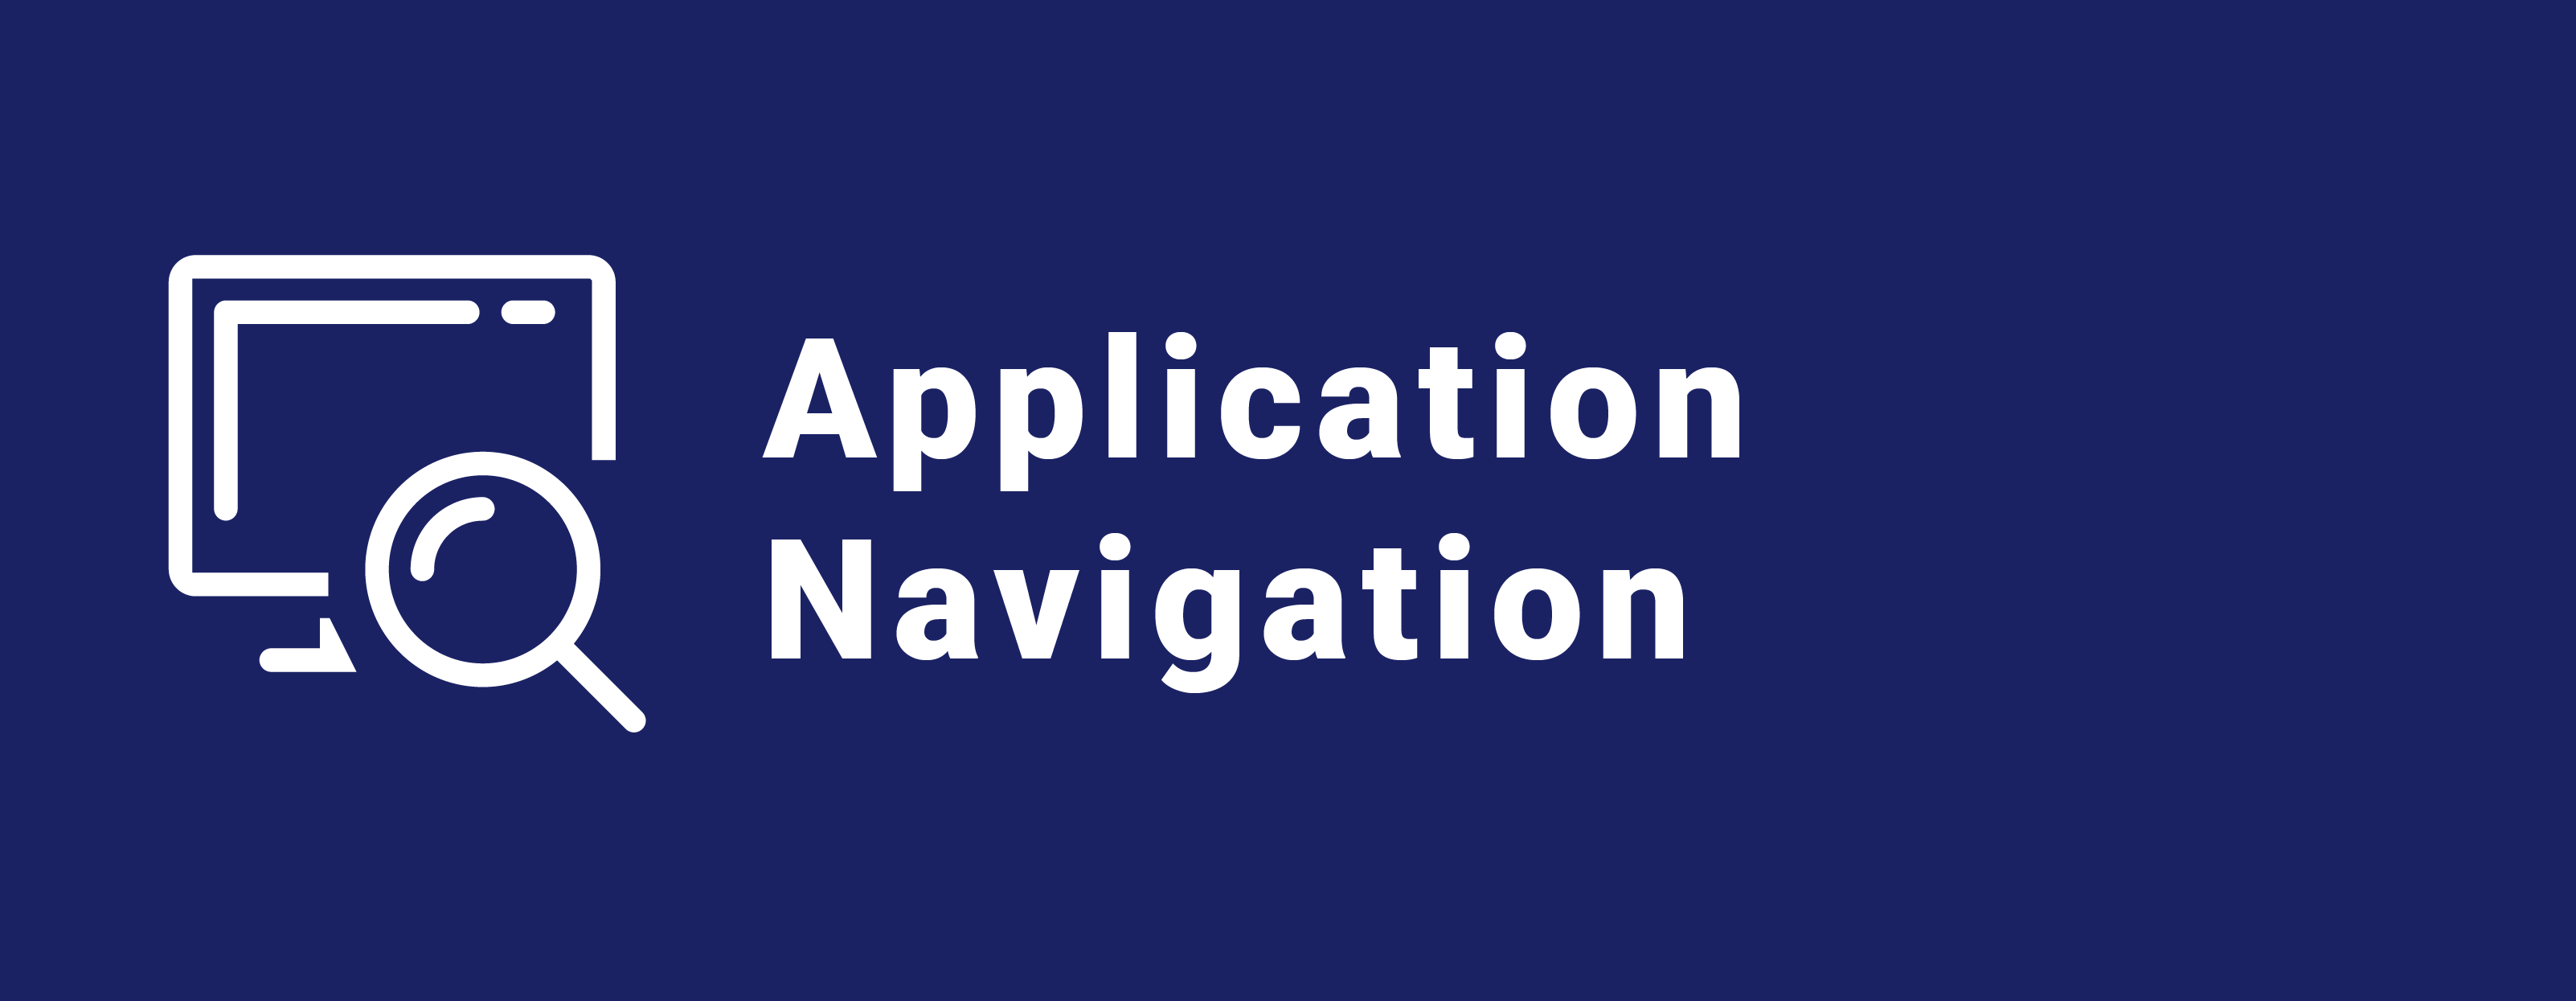 Application Navigation